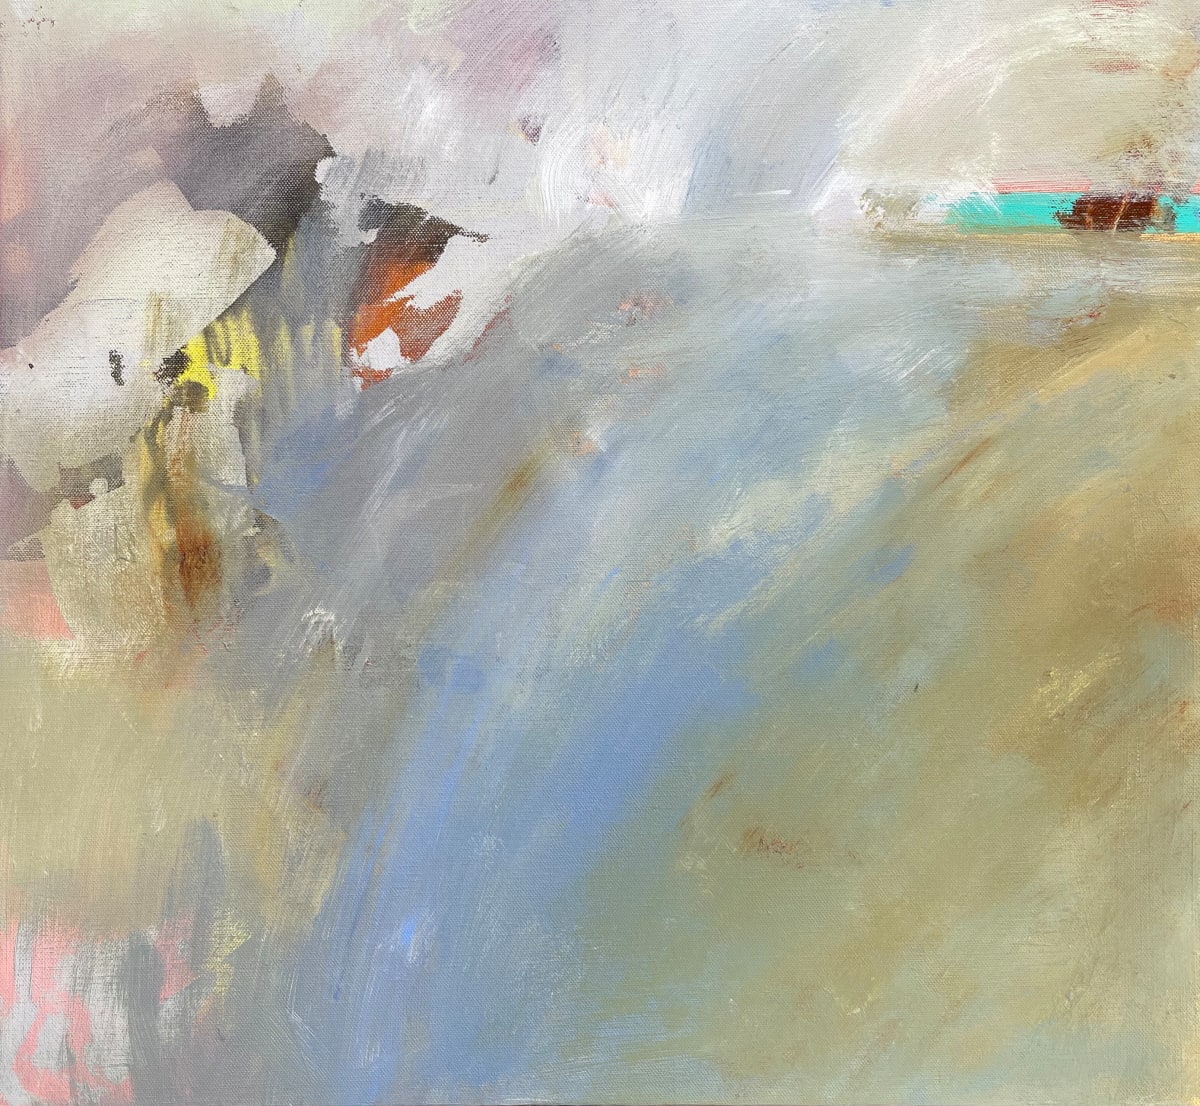 Field of Dreams by Linda Slattery Sherman  Image: An abstract landscape